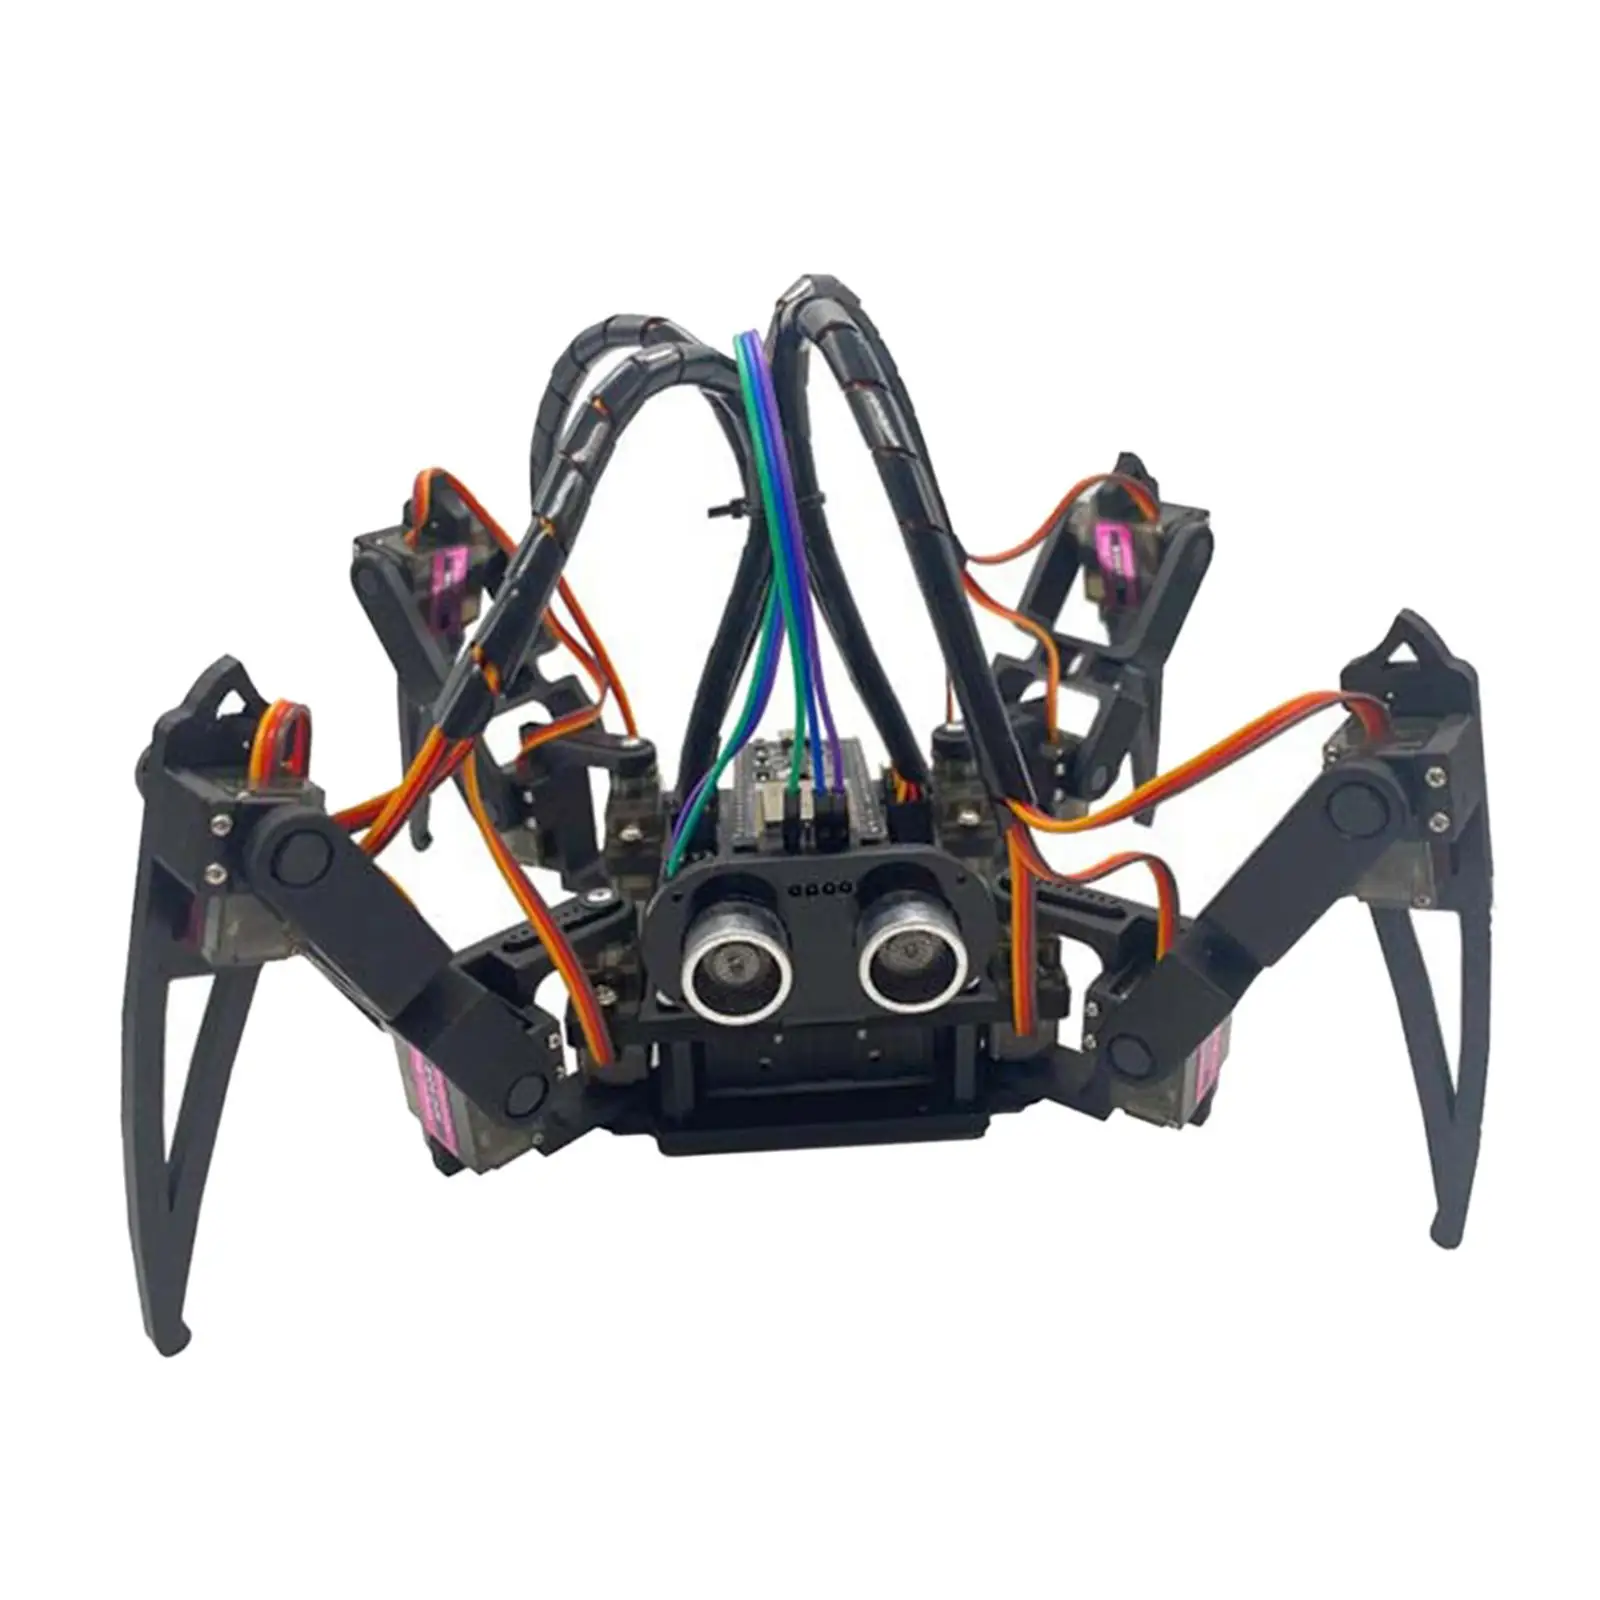 Spider Robot 3D Printing Programming Robot for Crawling Walking Twisting